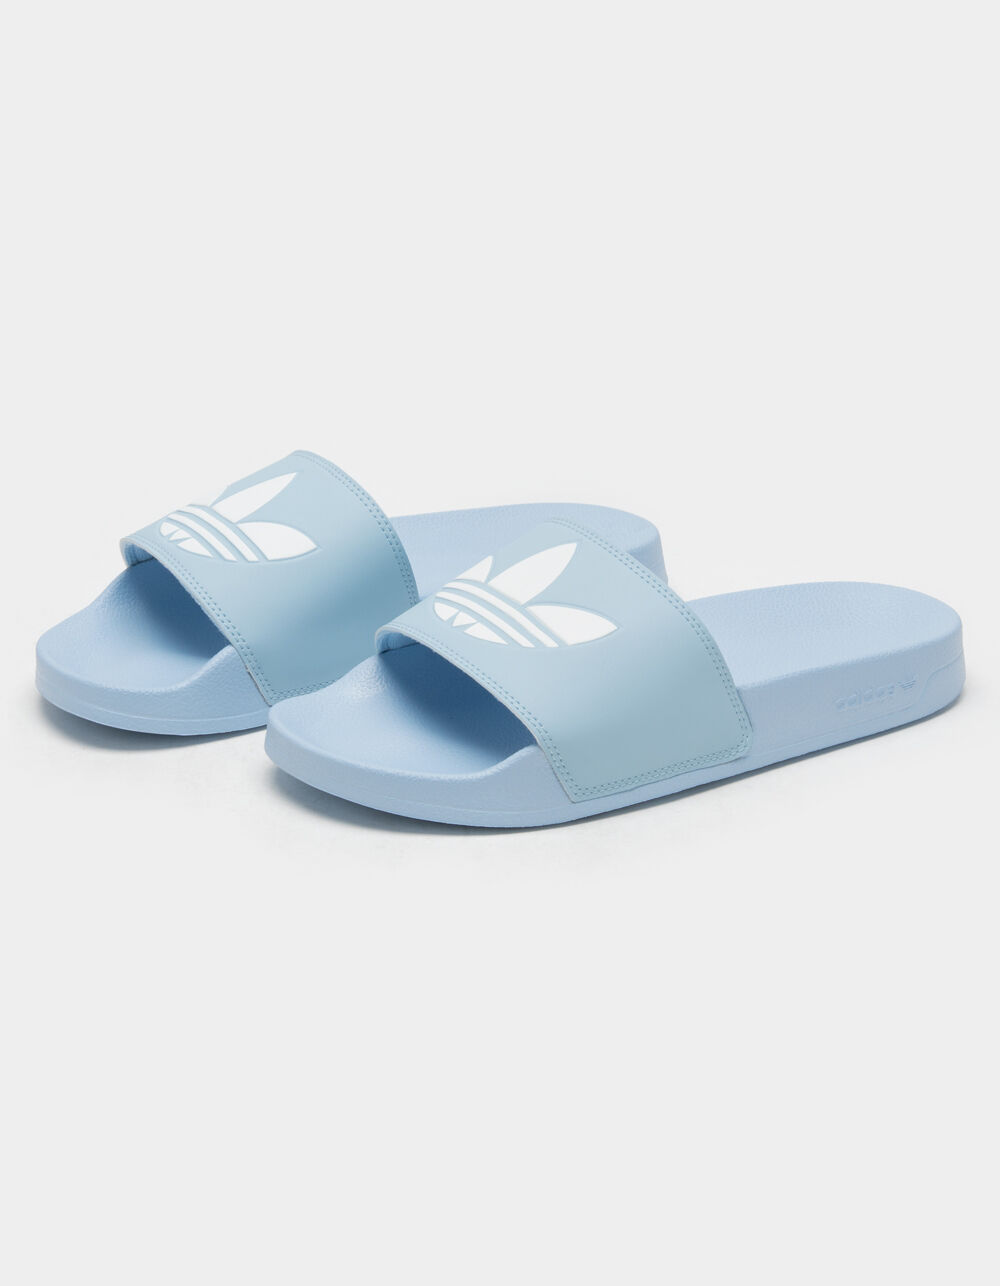 Adilette Lite Womens Baby Blue Slide Sandals - BABY BLUE |